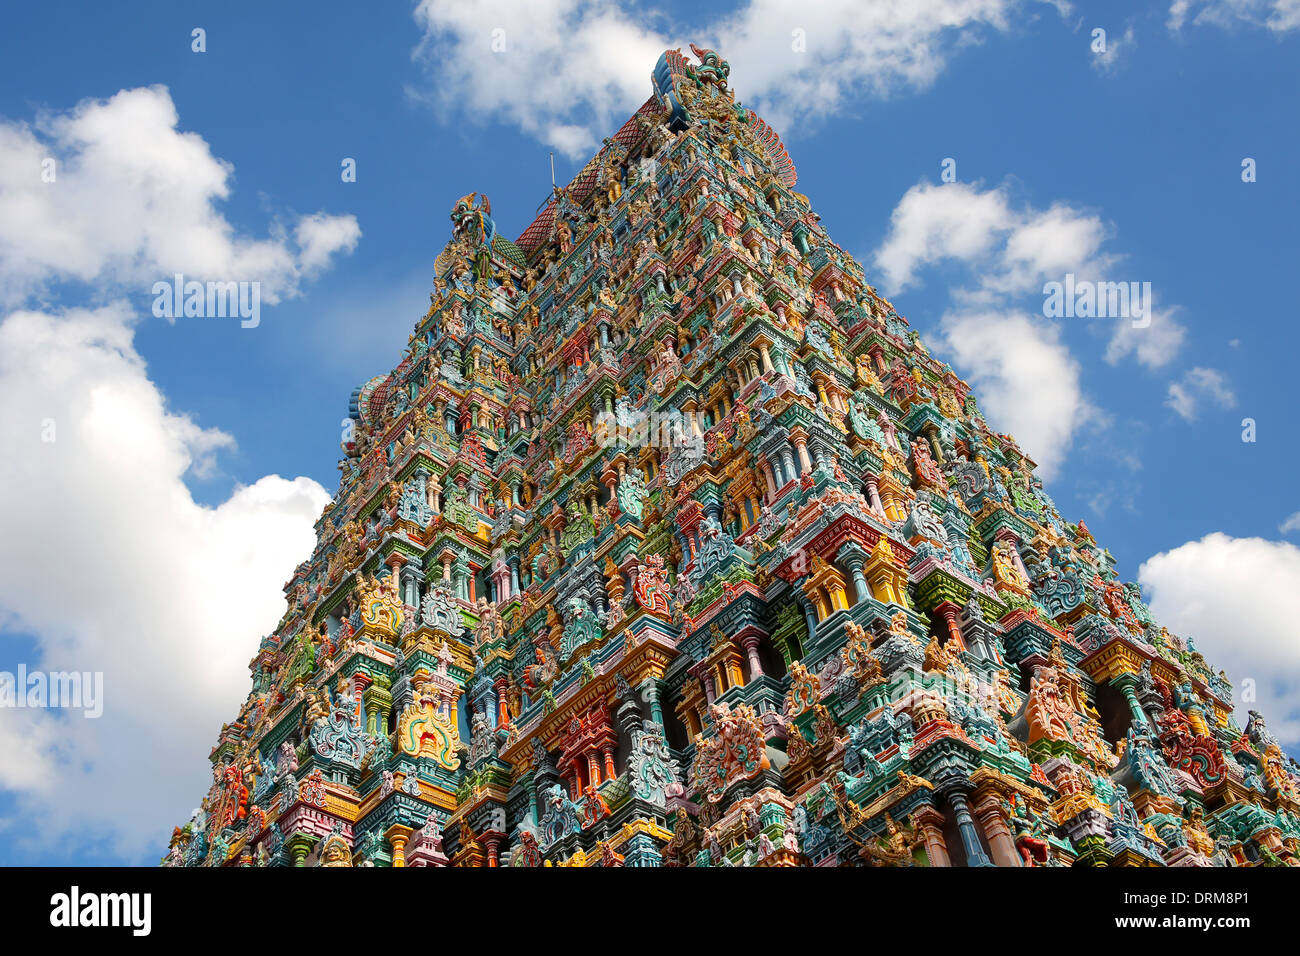 sri meenakshi temple, Madurai, India Stock Photo